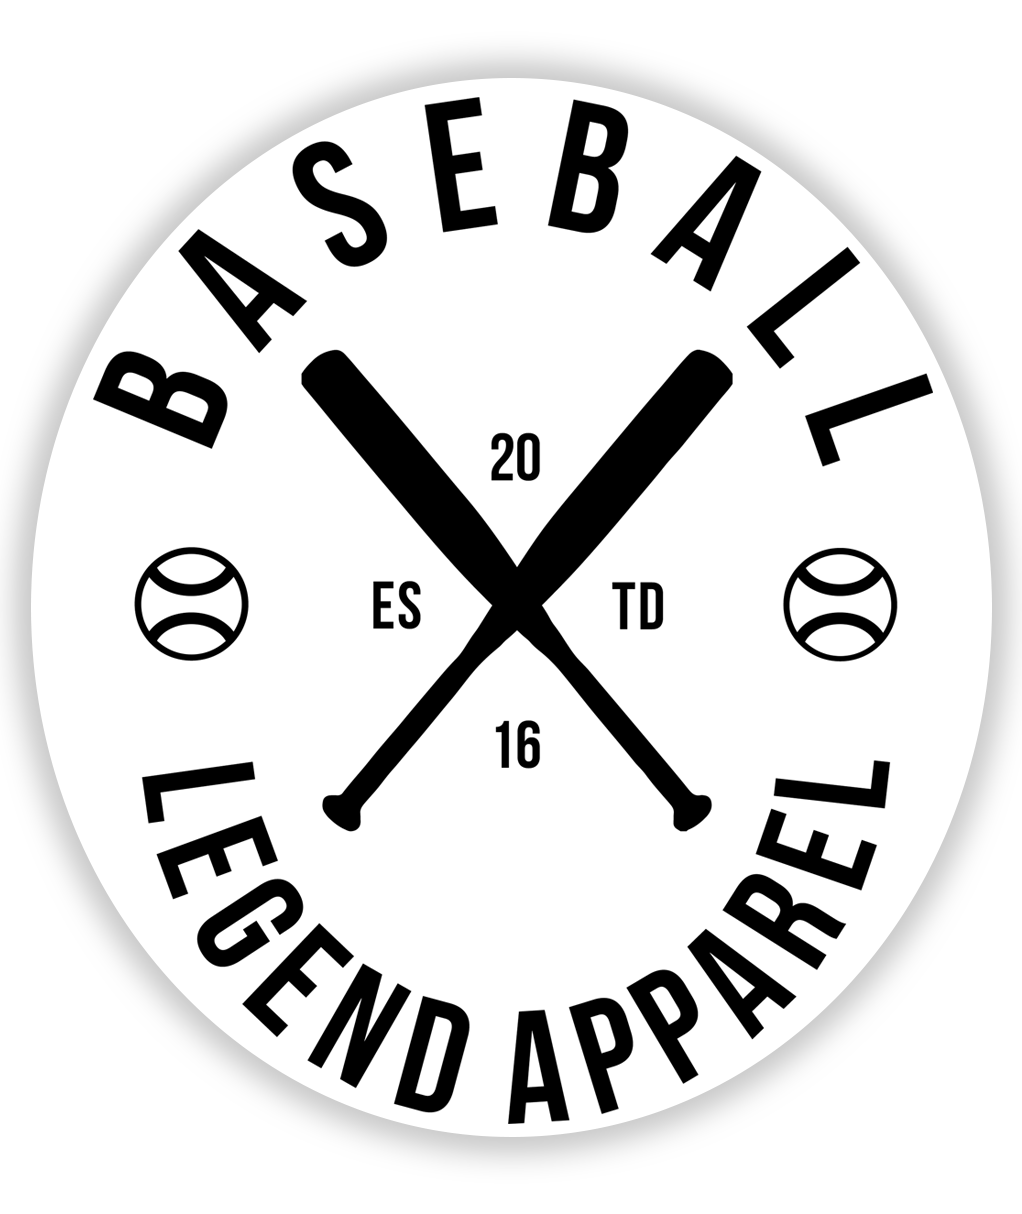 Brand Sticker - Baseball Legend Apparel